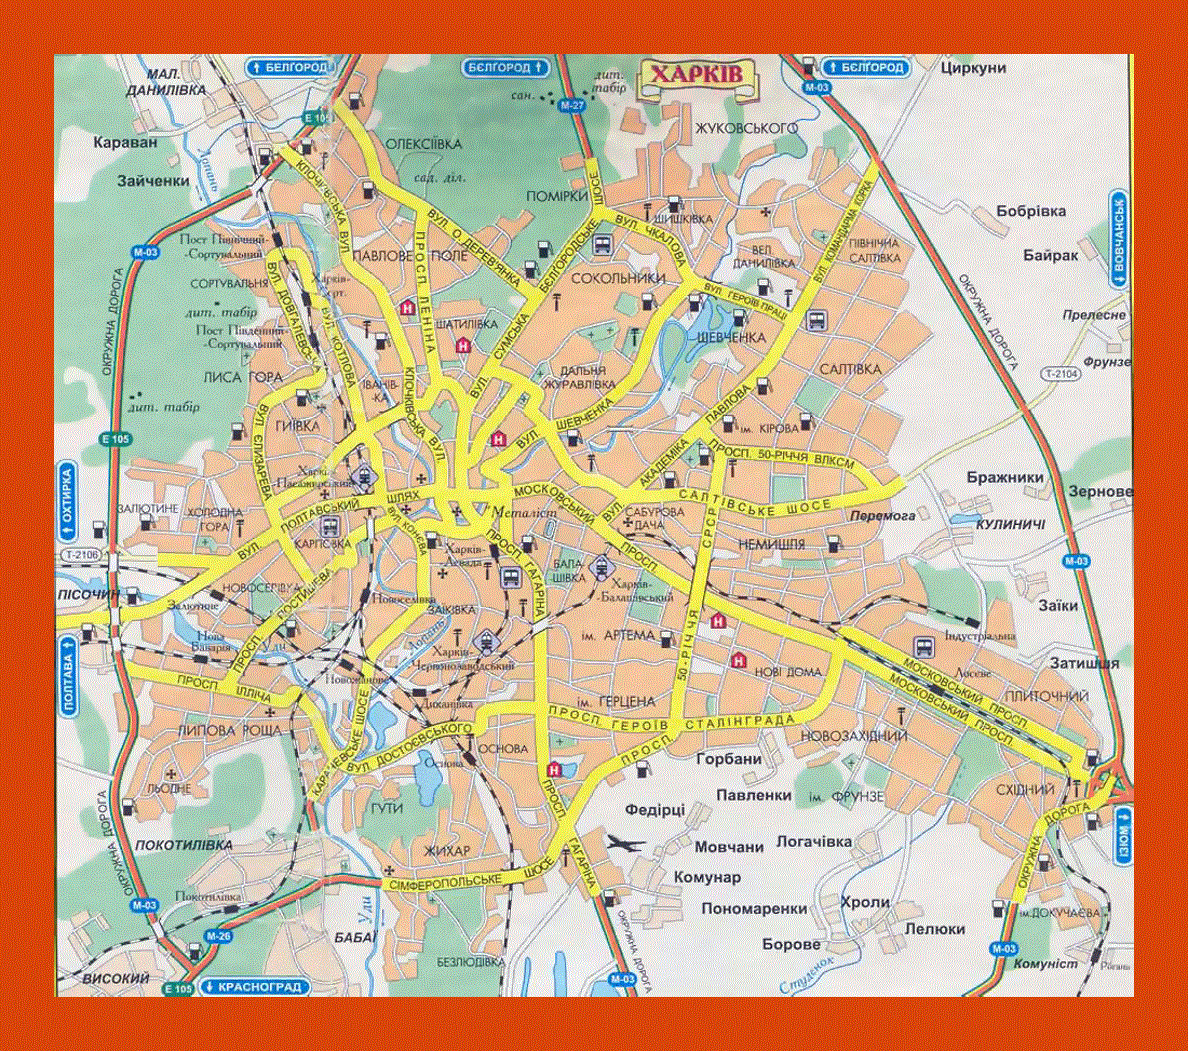 Transit map of Kharkov city